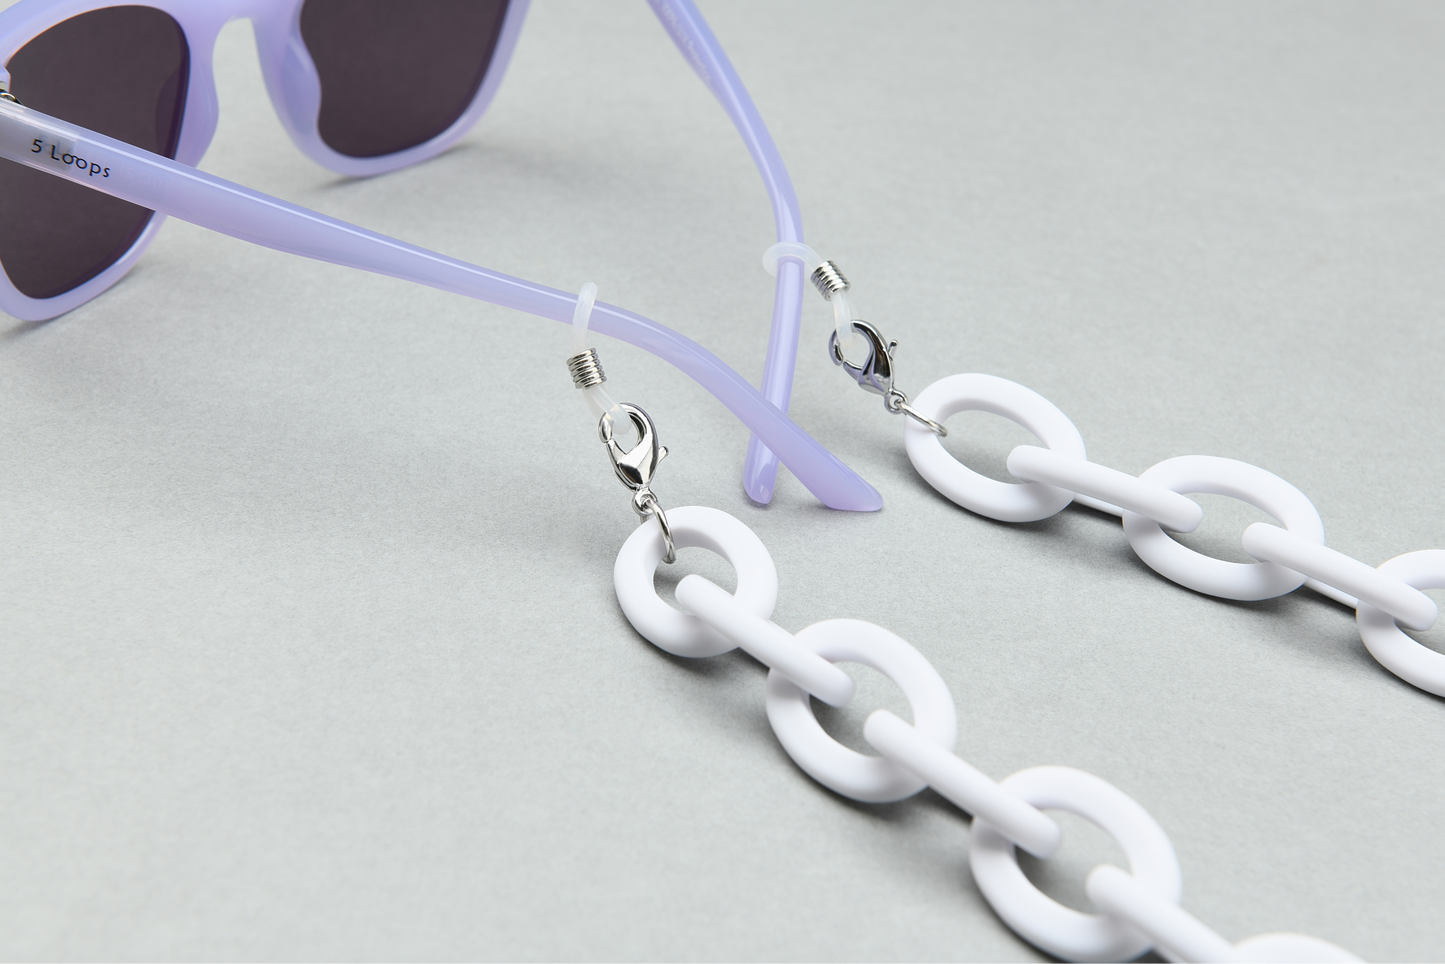 Glasses Chains - Lavender Ring